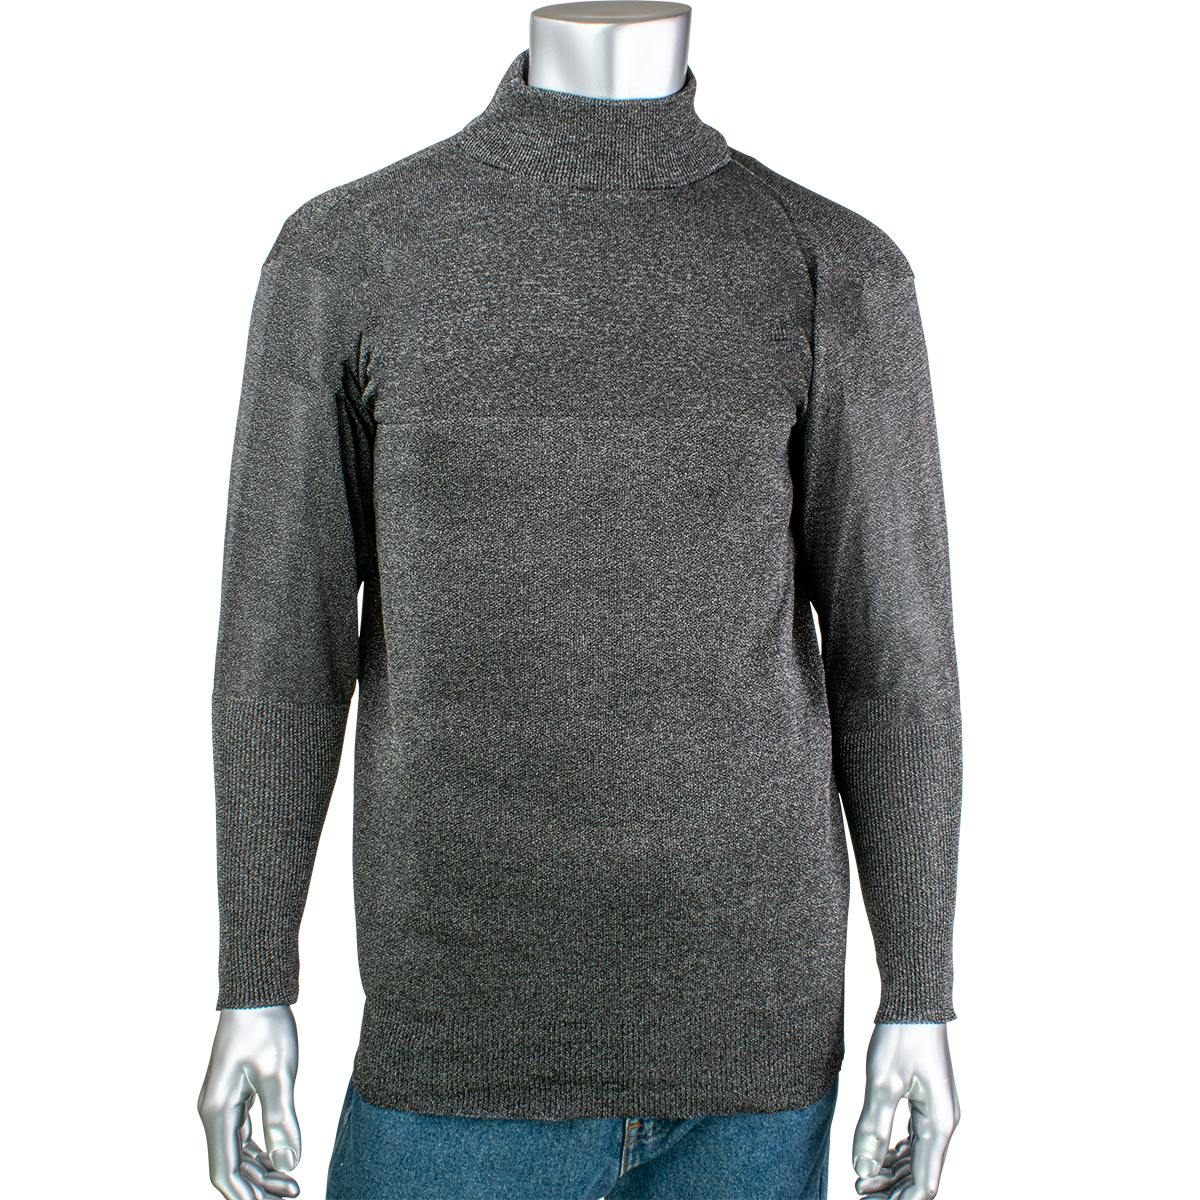 ATA® Blended Cut Resistant Pullover, Dark Gray (P100SP)_1